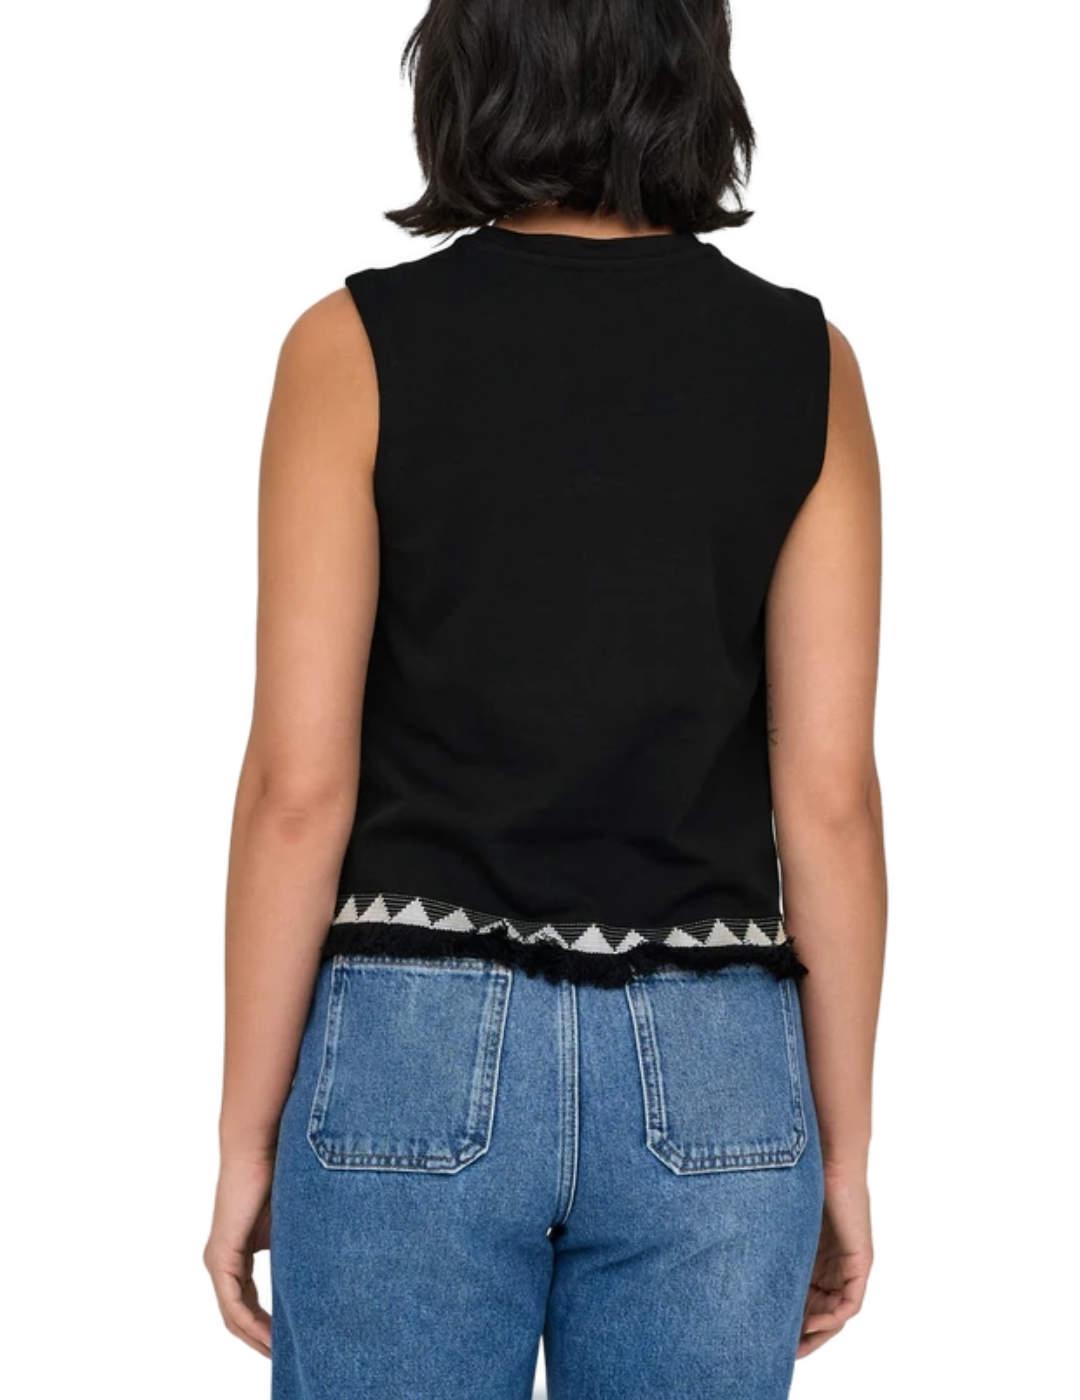 Camiseta Only Liva negro manga sisa y bordado para mujer